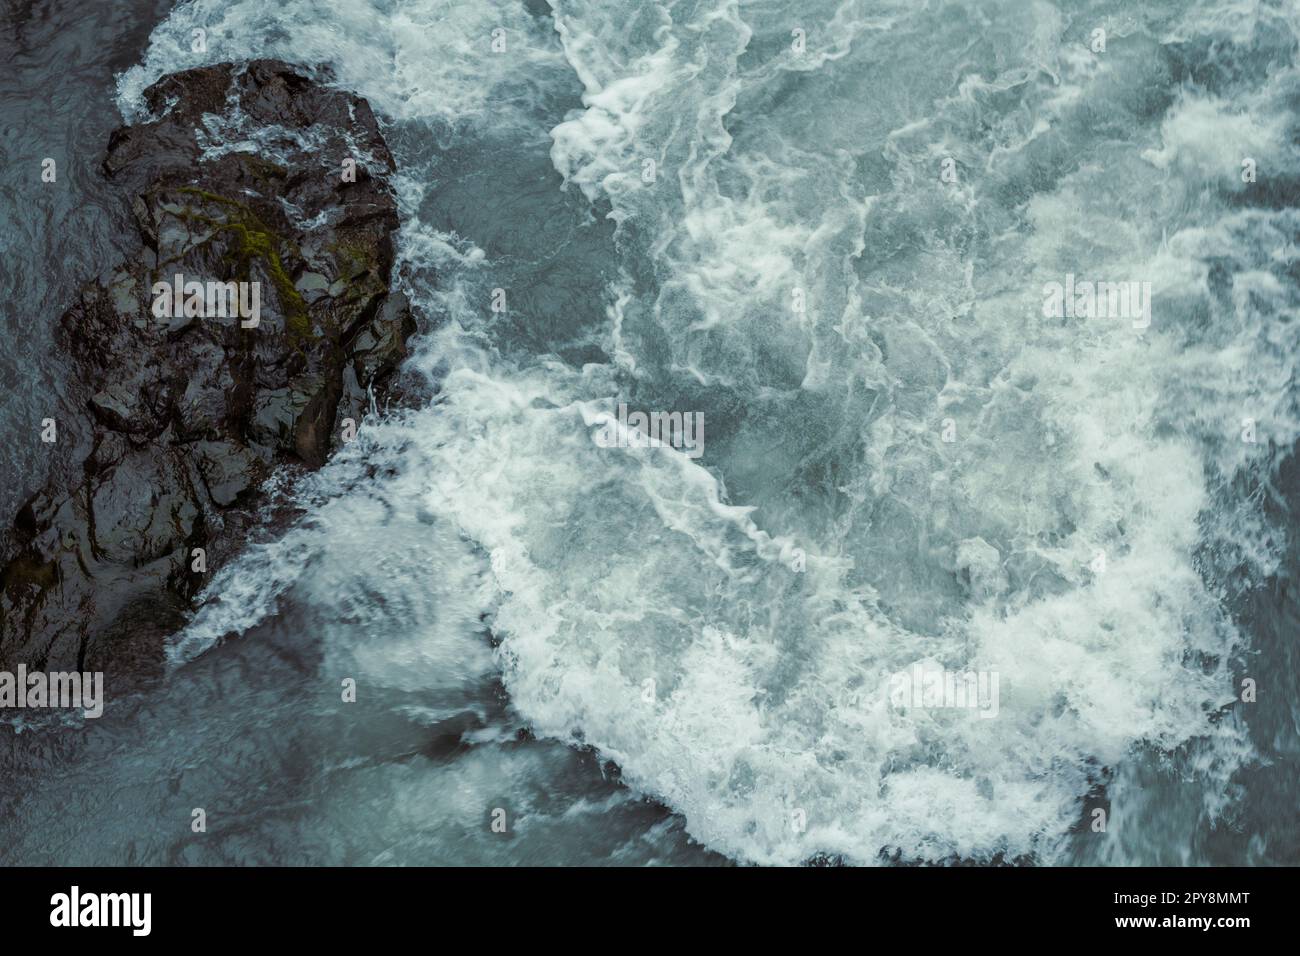 Swirling Hvira river with rock landscape photo Stock Photo